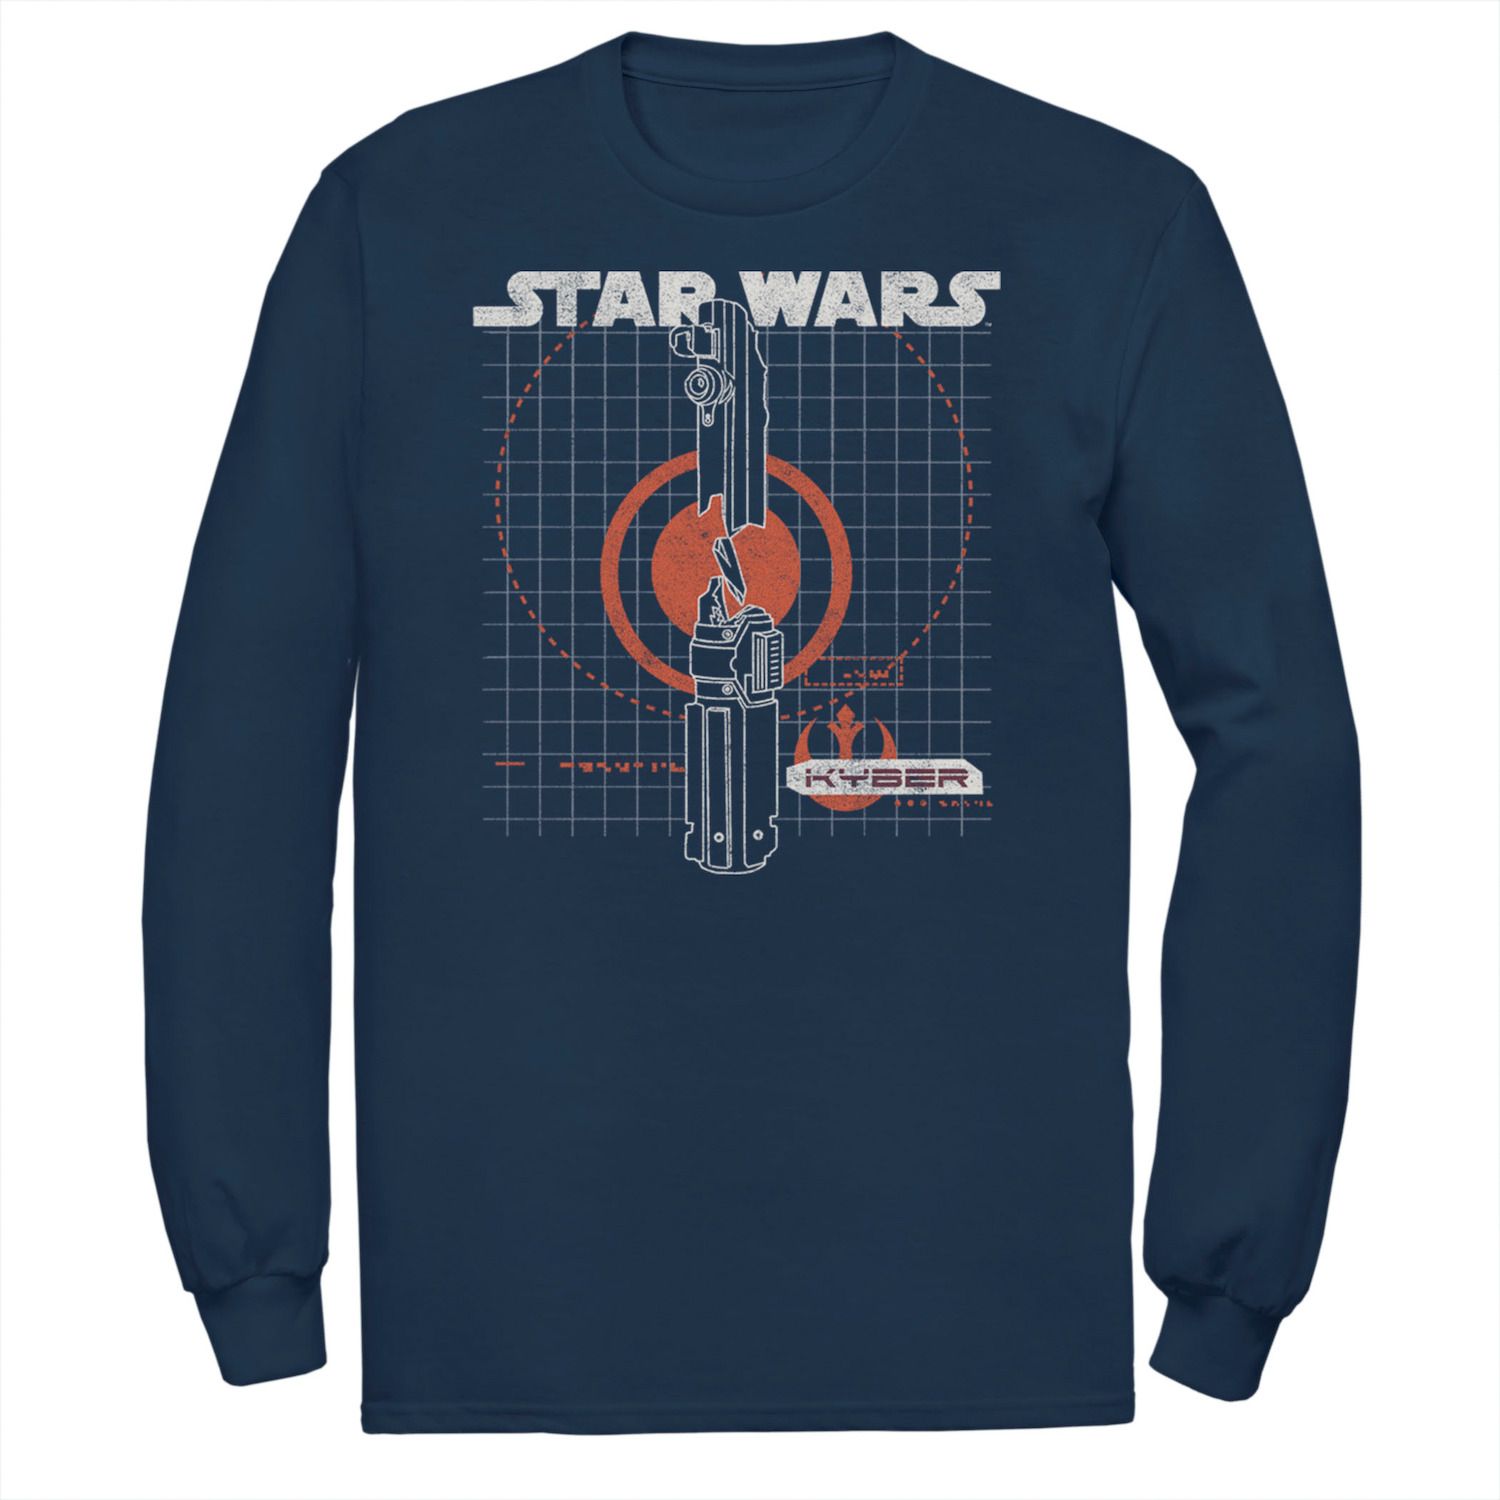 Image for Licensed Character Men's Star Wars Lightsaber Blueprint Graphic Sweatshirt at Kohl's.